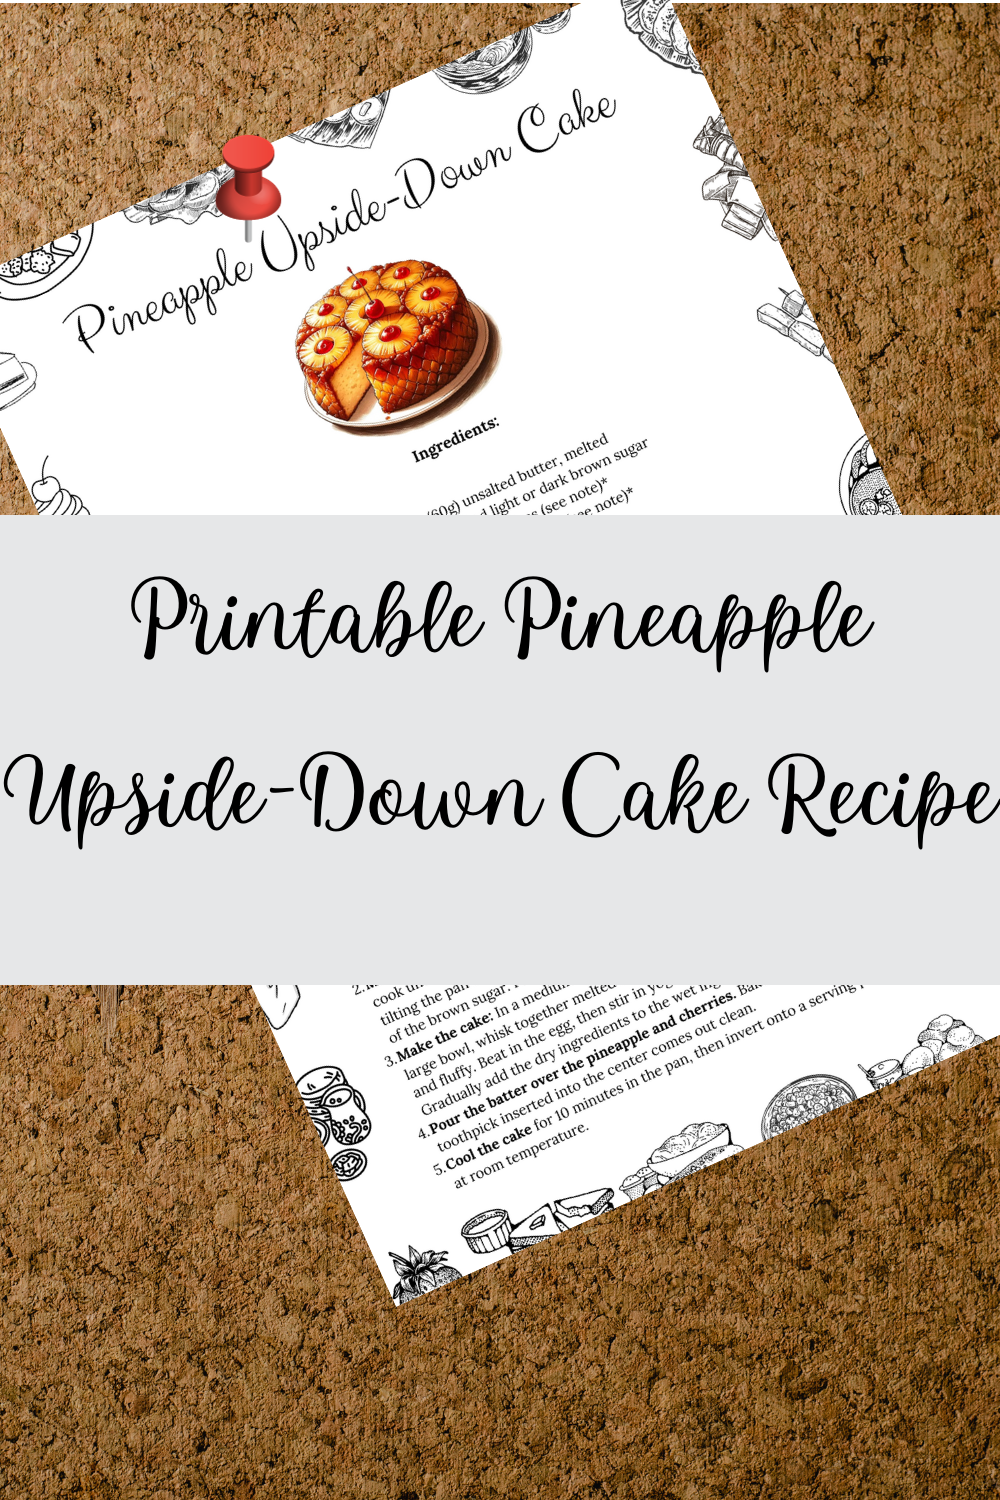 Printable Pineapple Upside-Down Cake Recipe